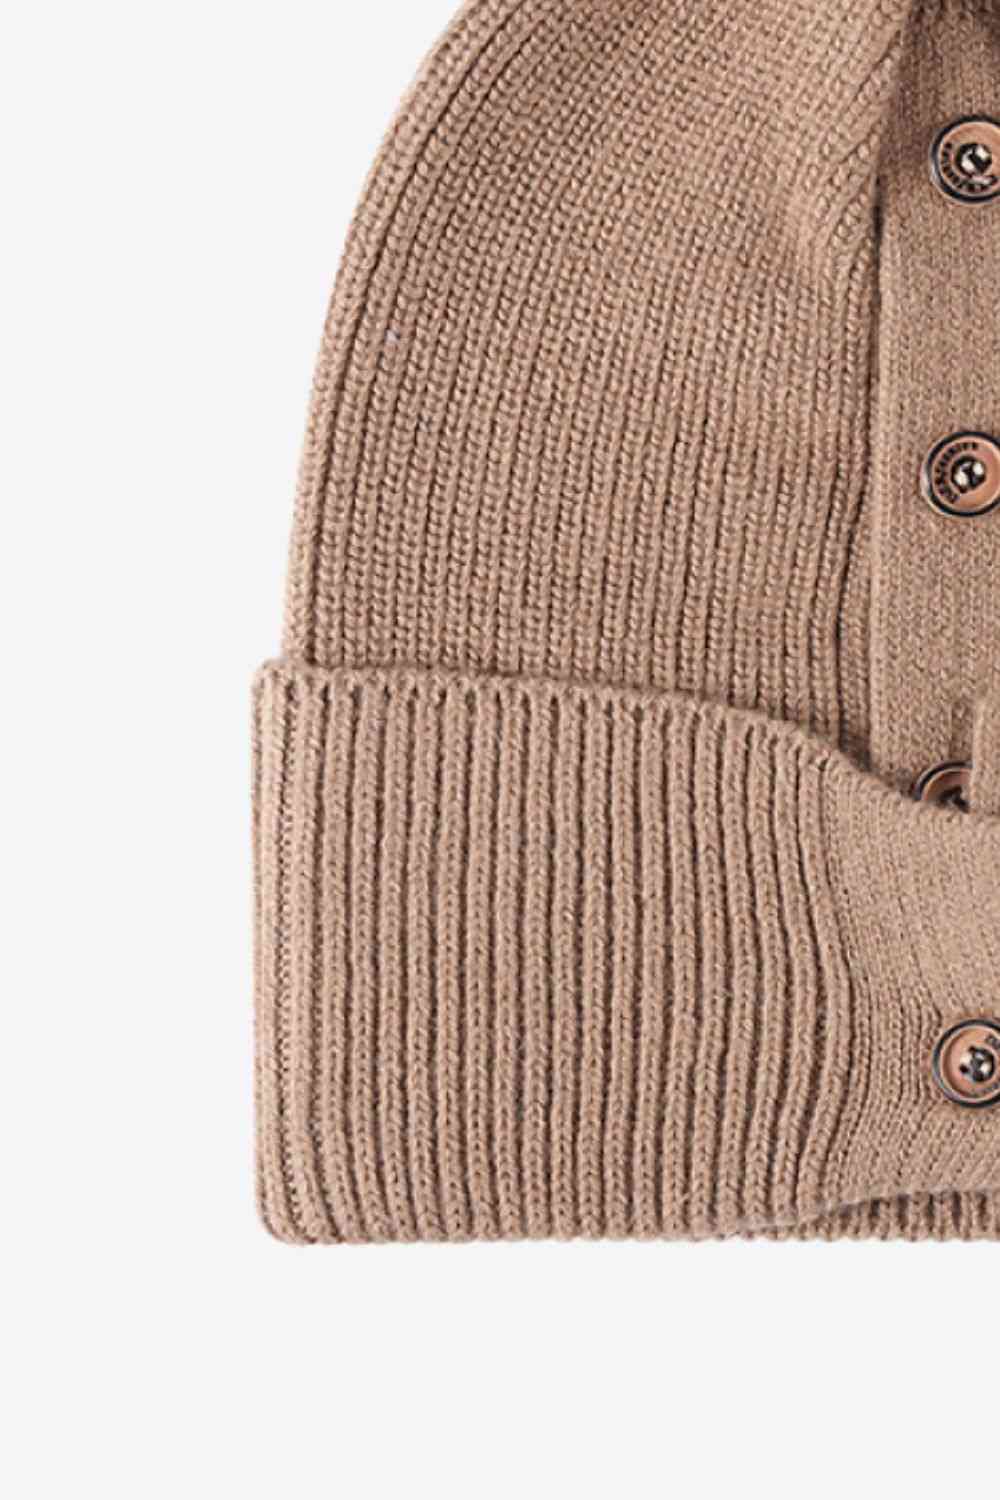 CHIC HATZ Button Detail Rib-Knit Hat Cuff Beanie